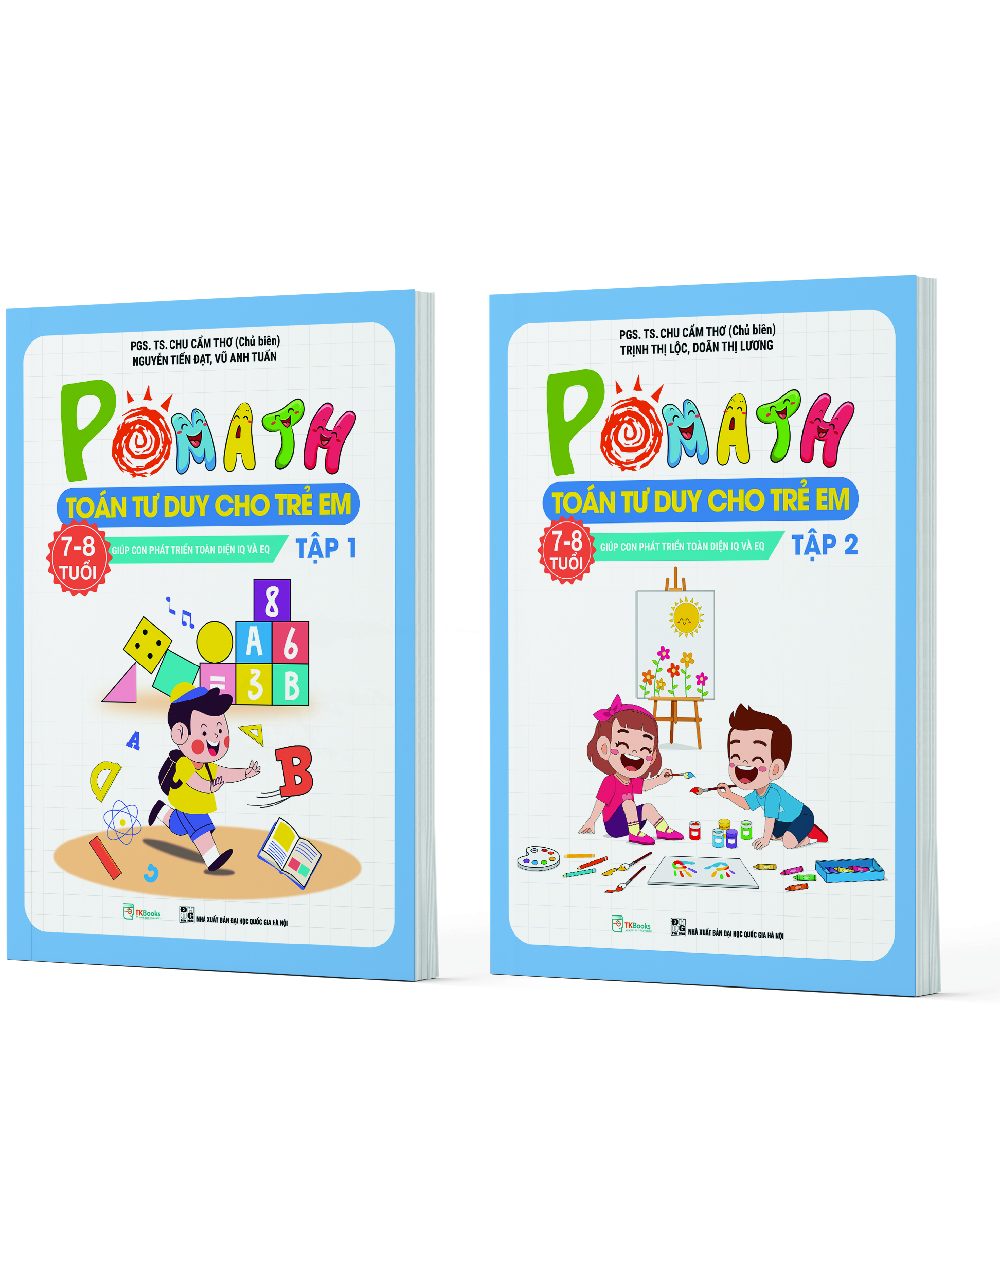 Combo POMath – Toán tư duy cho trẻ em 7 – 8 tuổi (Tập 1 + 2)